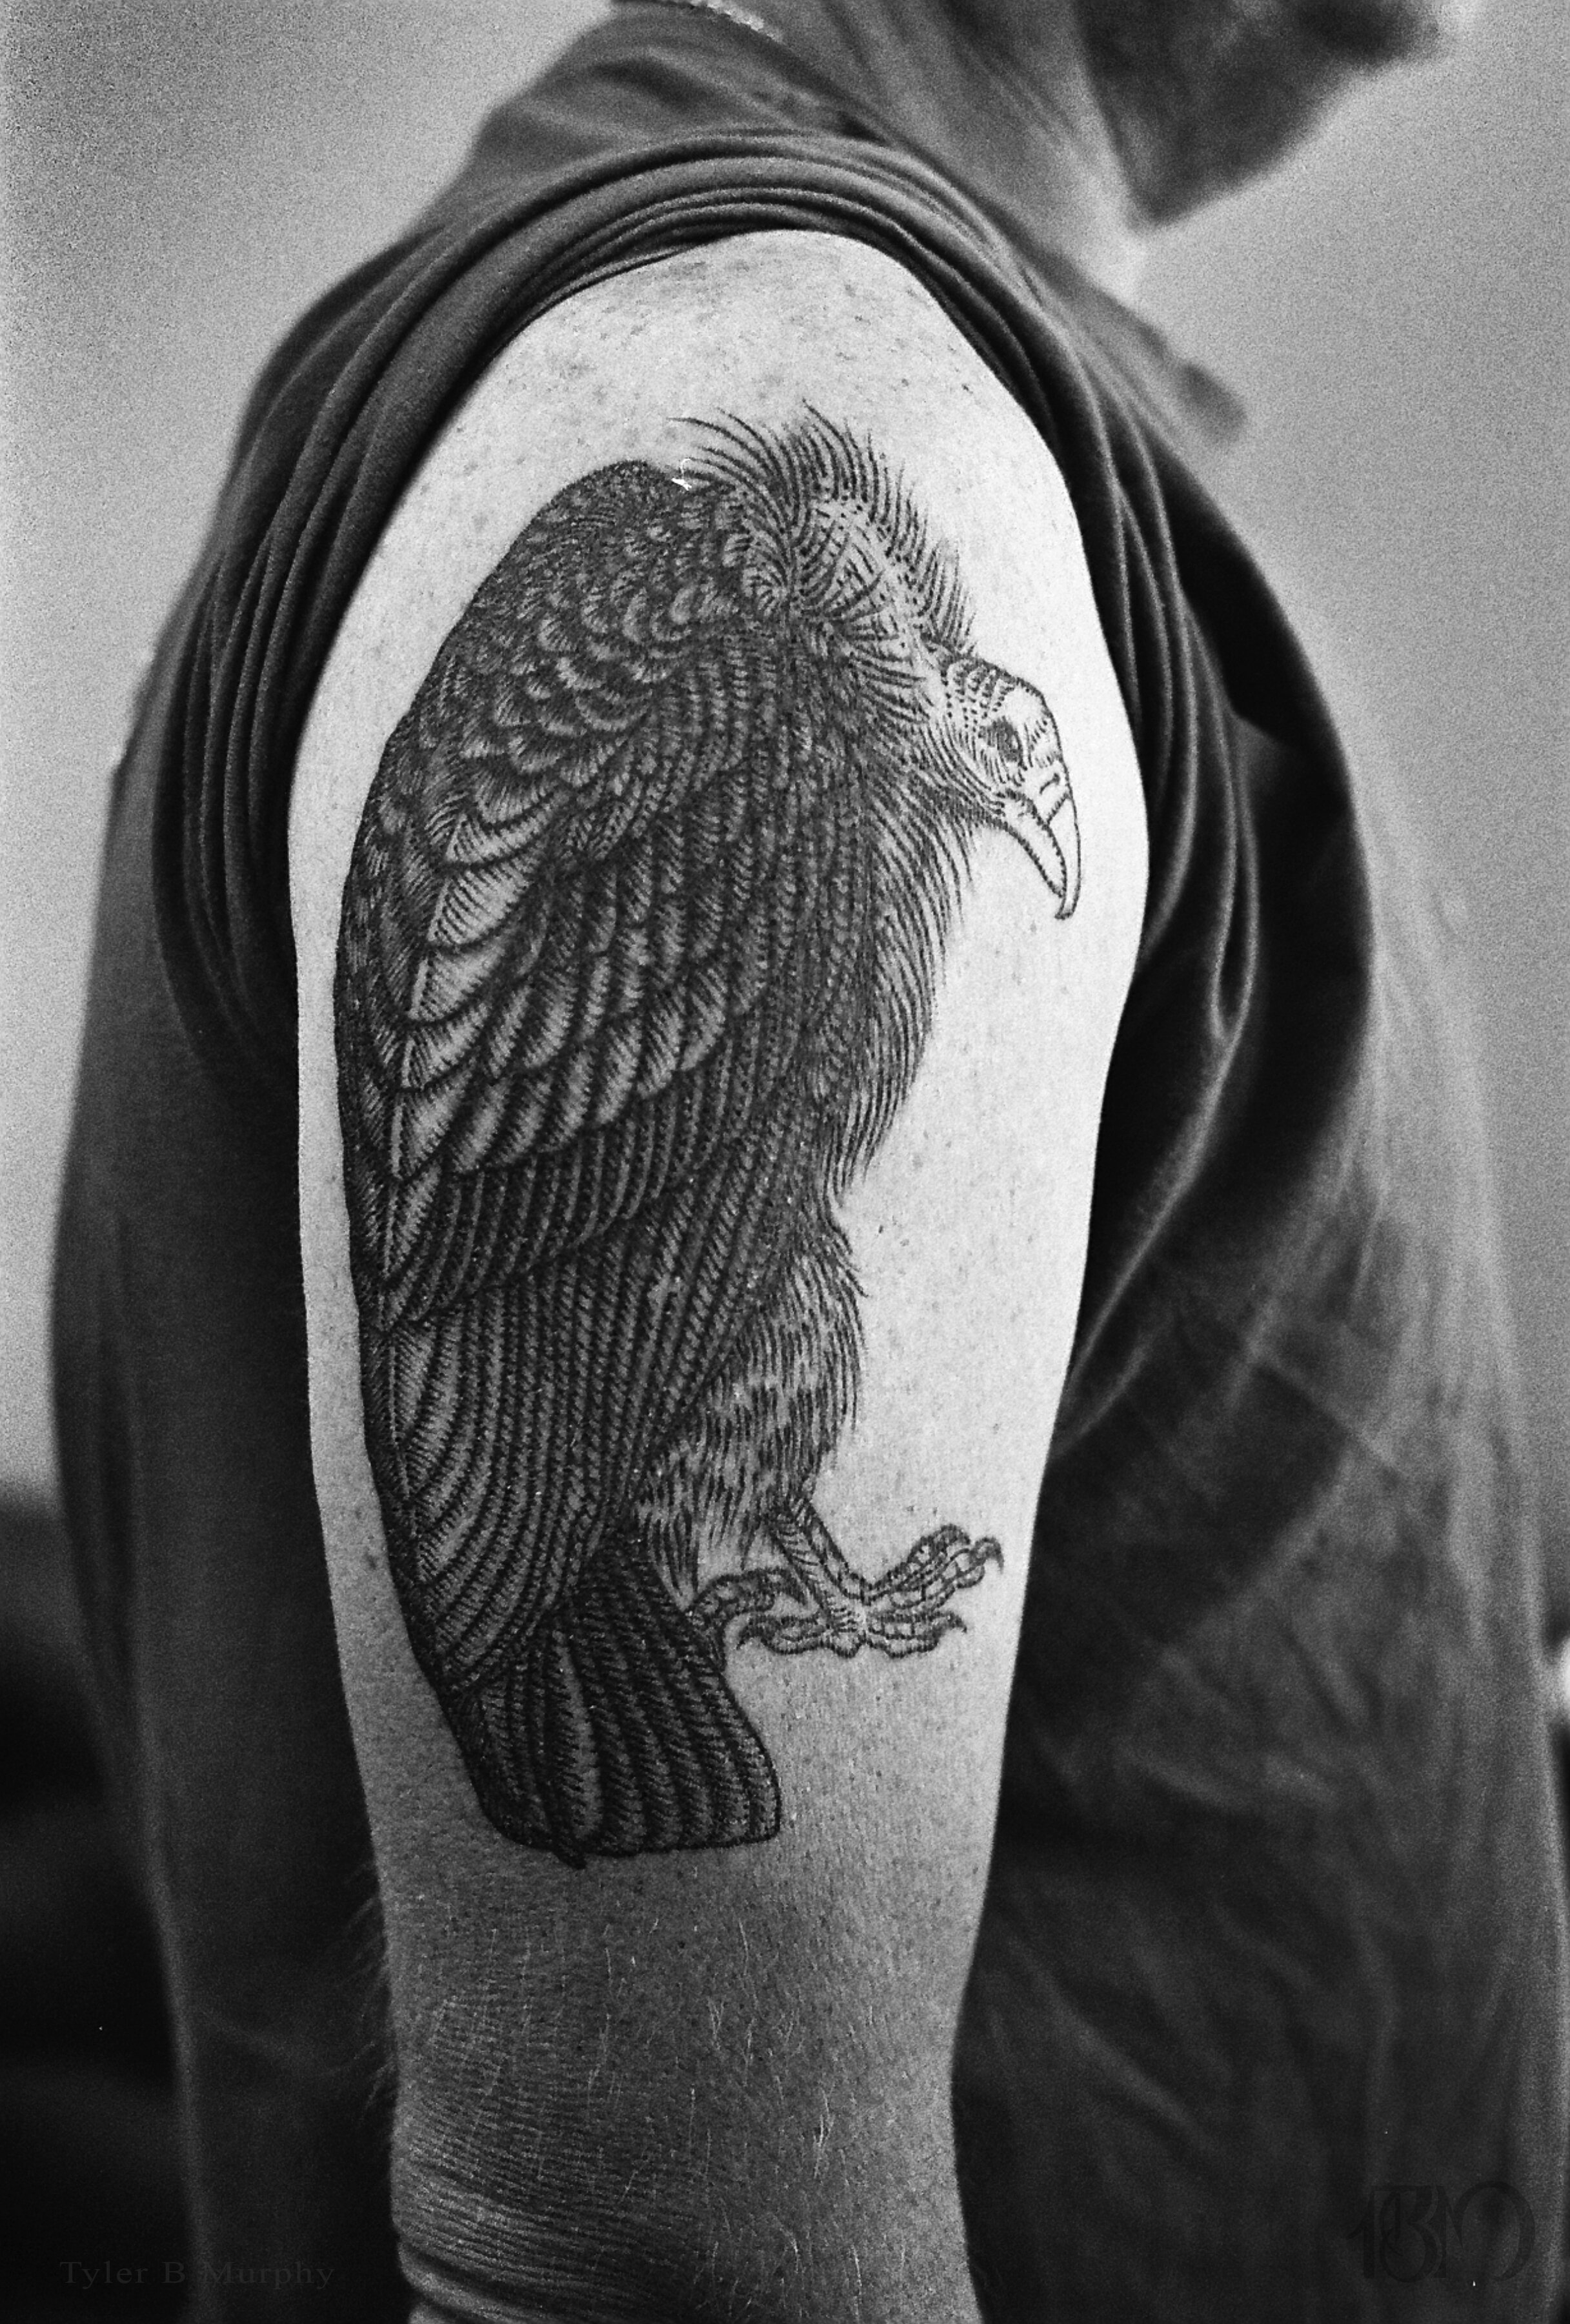 20 - Vulture tattoo Tyler B Murphy copy.jpg